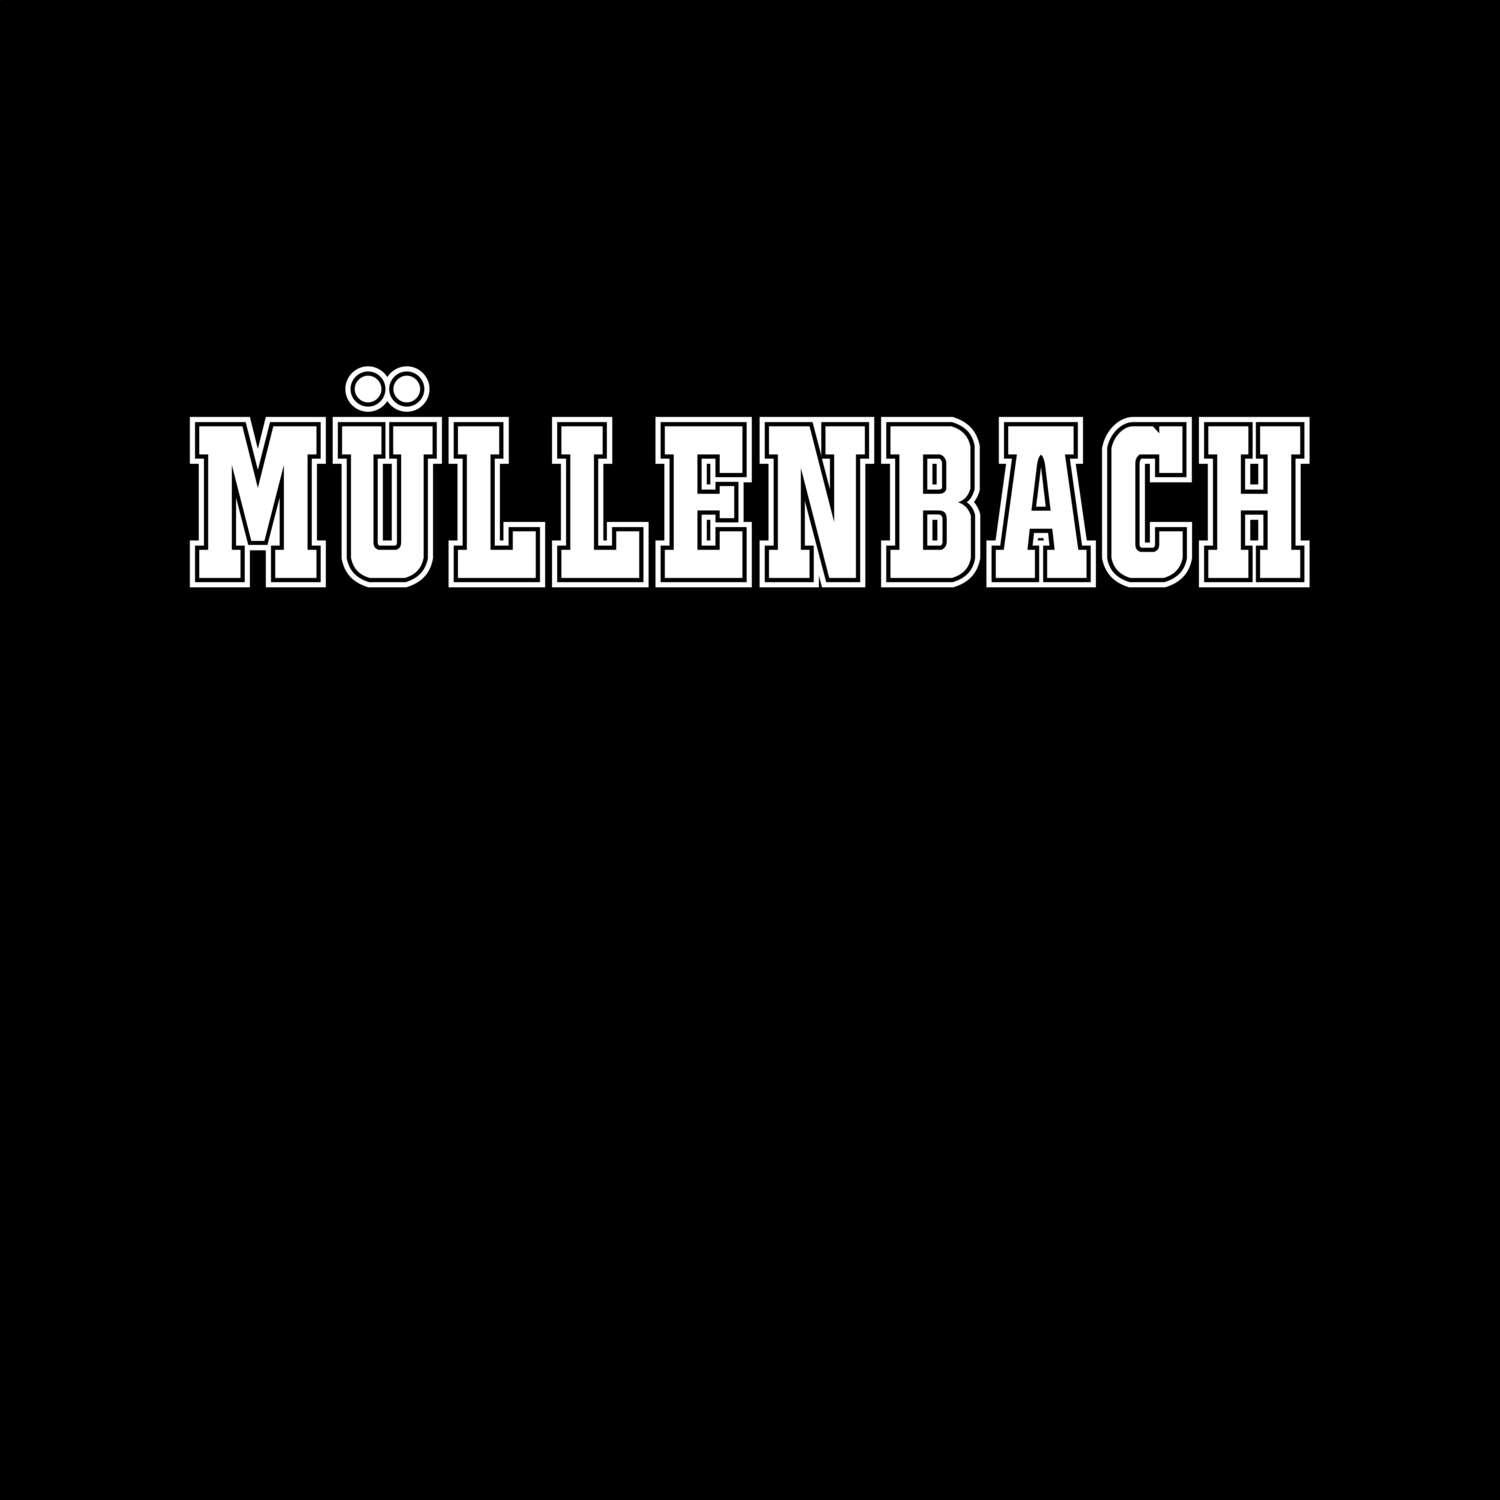 Müllenbach T-Shirt »Classic«